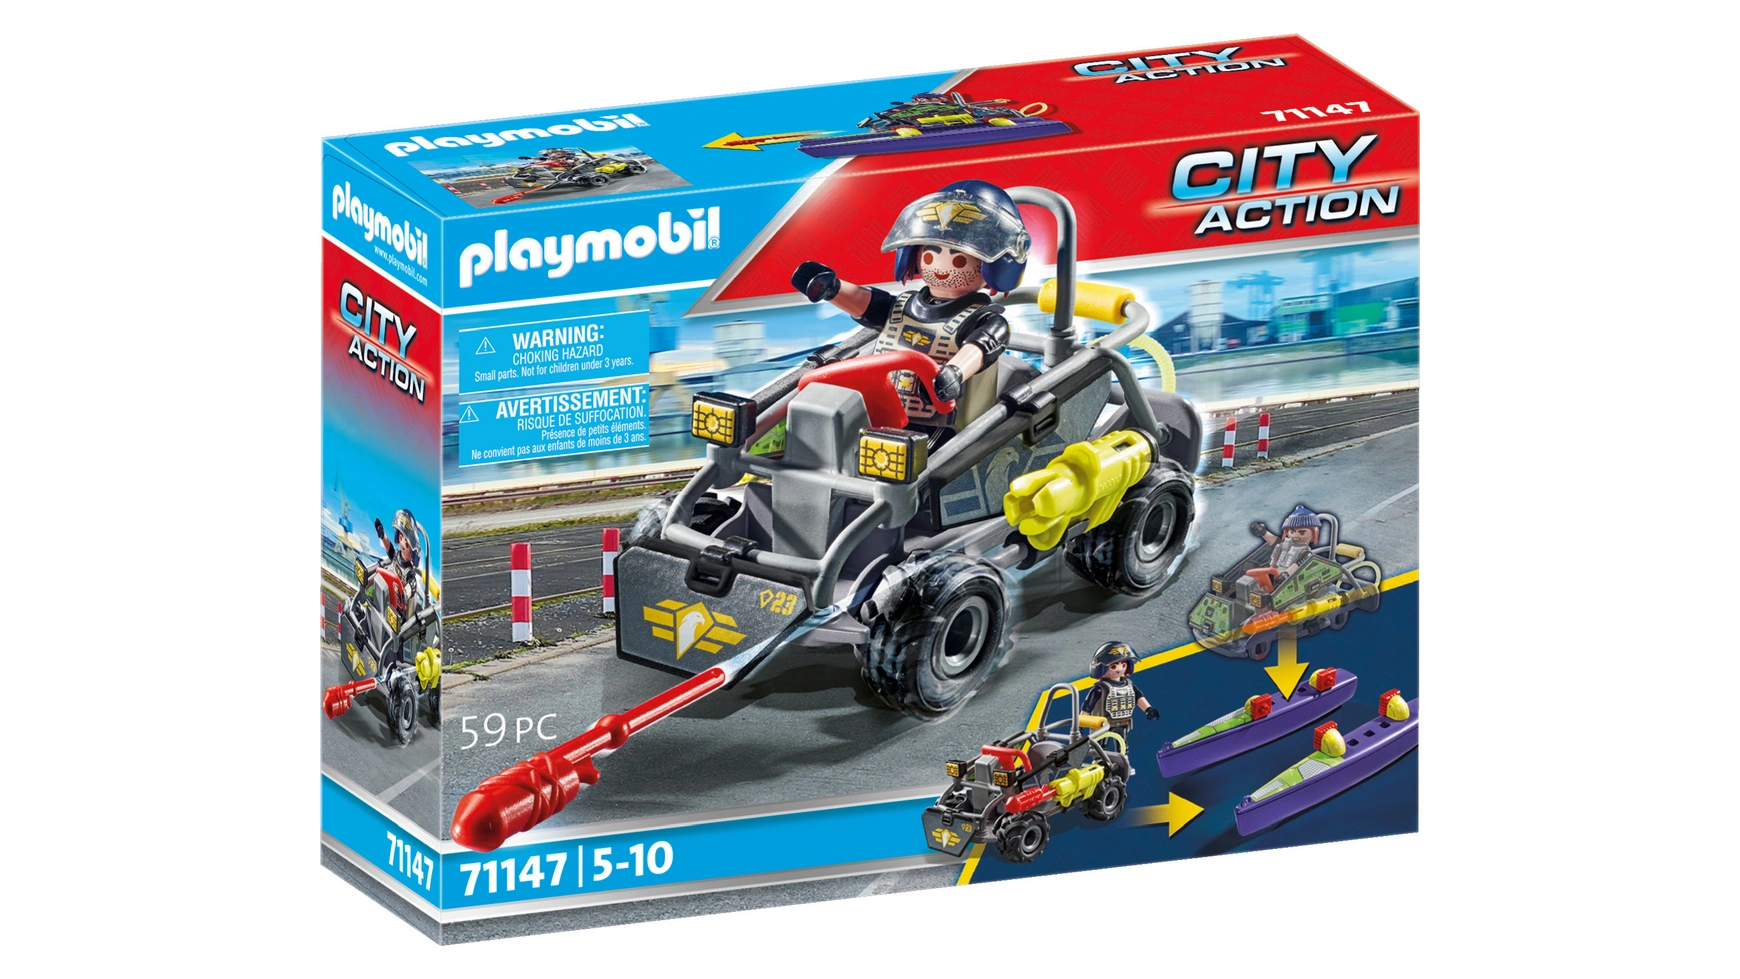 City action квадроцикл swat multi-terrain quad Playmobil